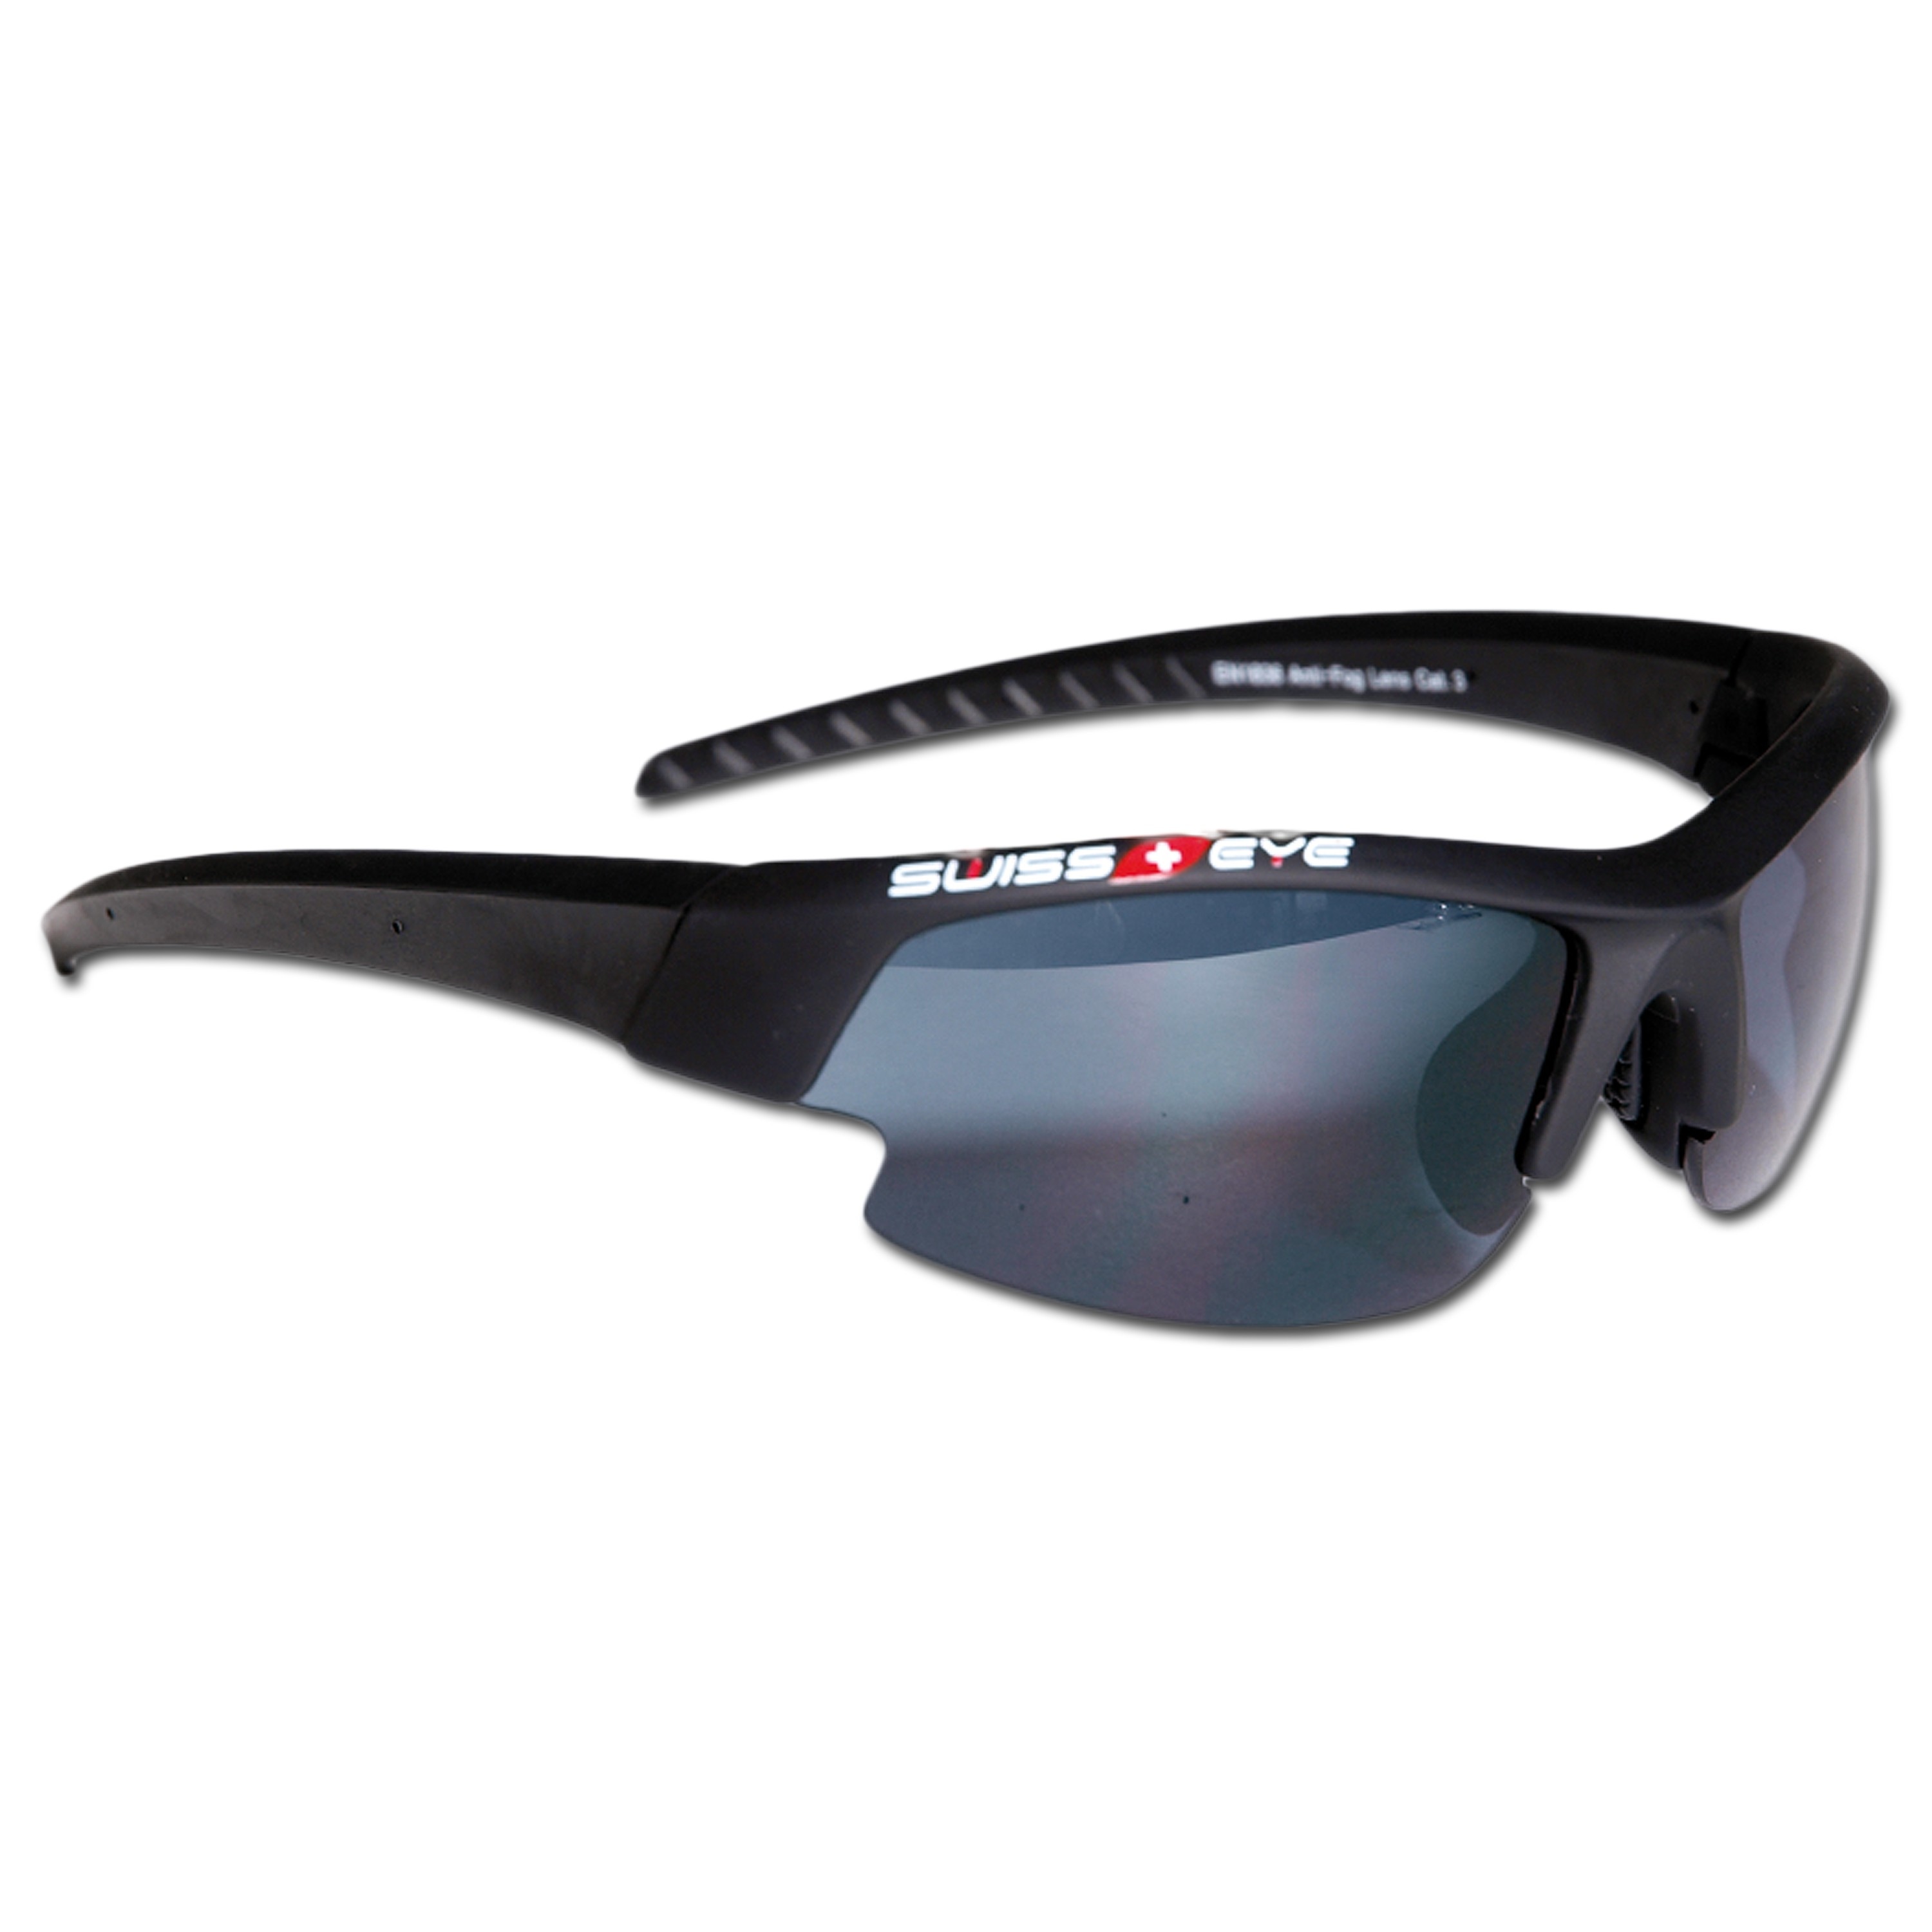 Purchase the Swiss Eye Glasses Gardosa Evolution M/P by ASMC